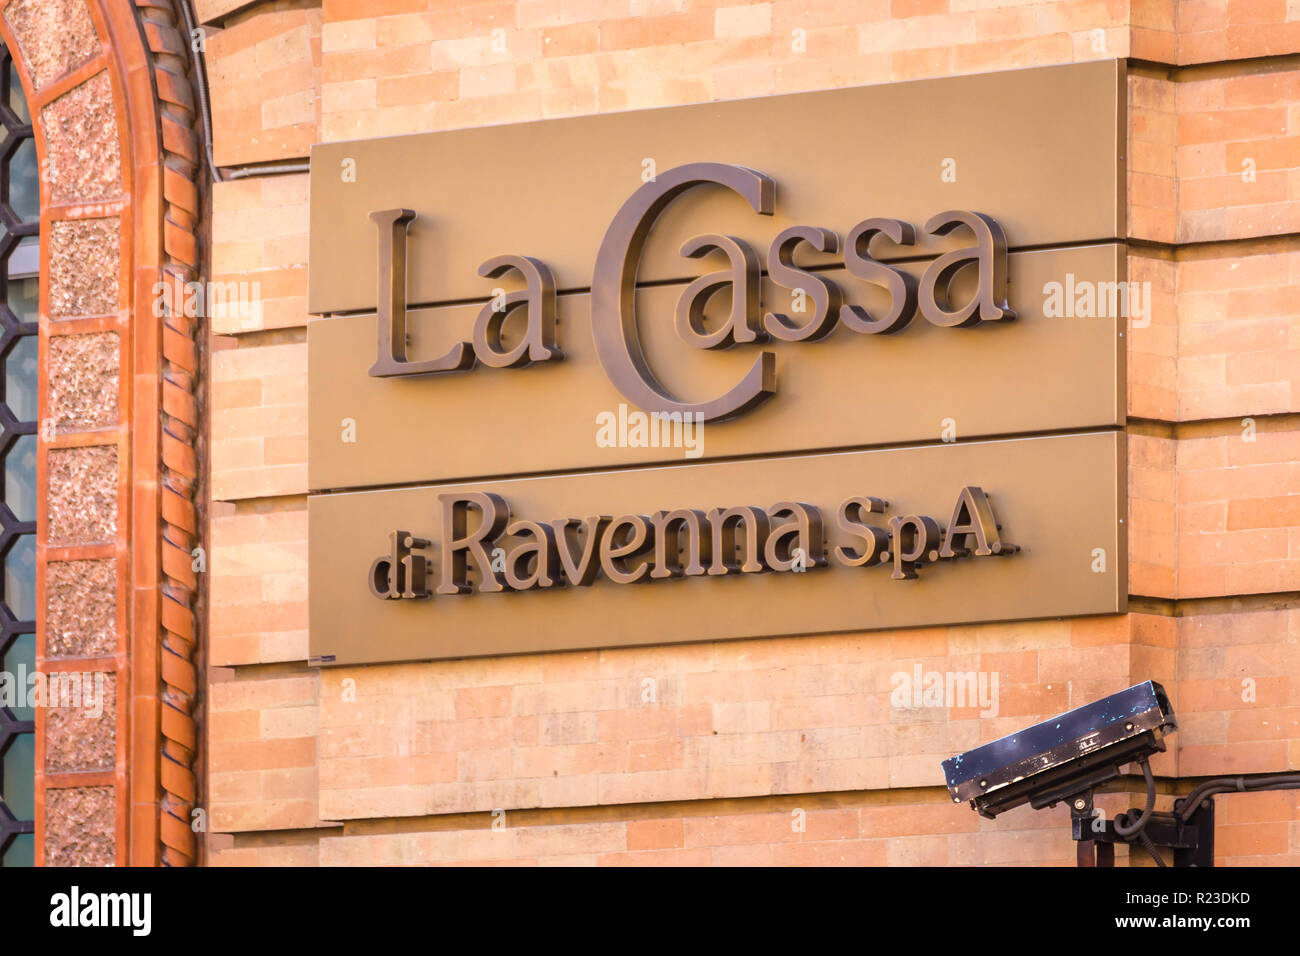 RAVENNA, ITALY - SEPTEMBER 12, 2018: light is enlightening  LA CASSA DI RAVENNA SPA logo on headquarters Stock Photo